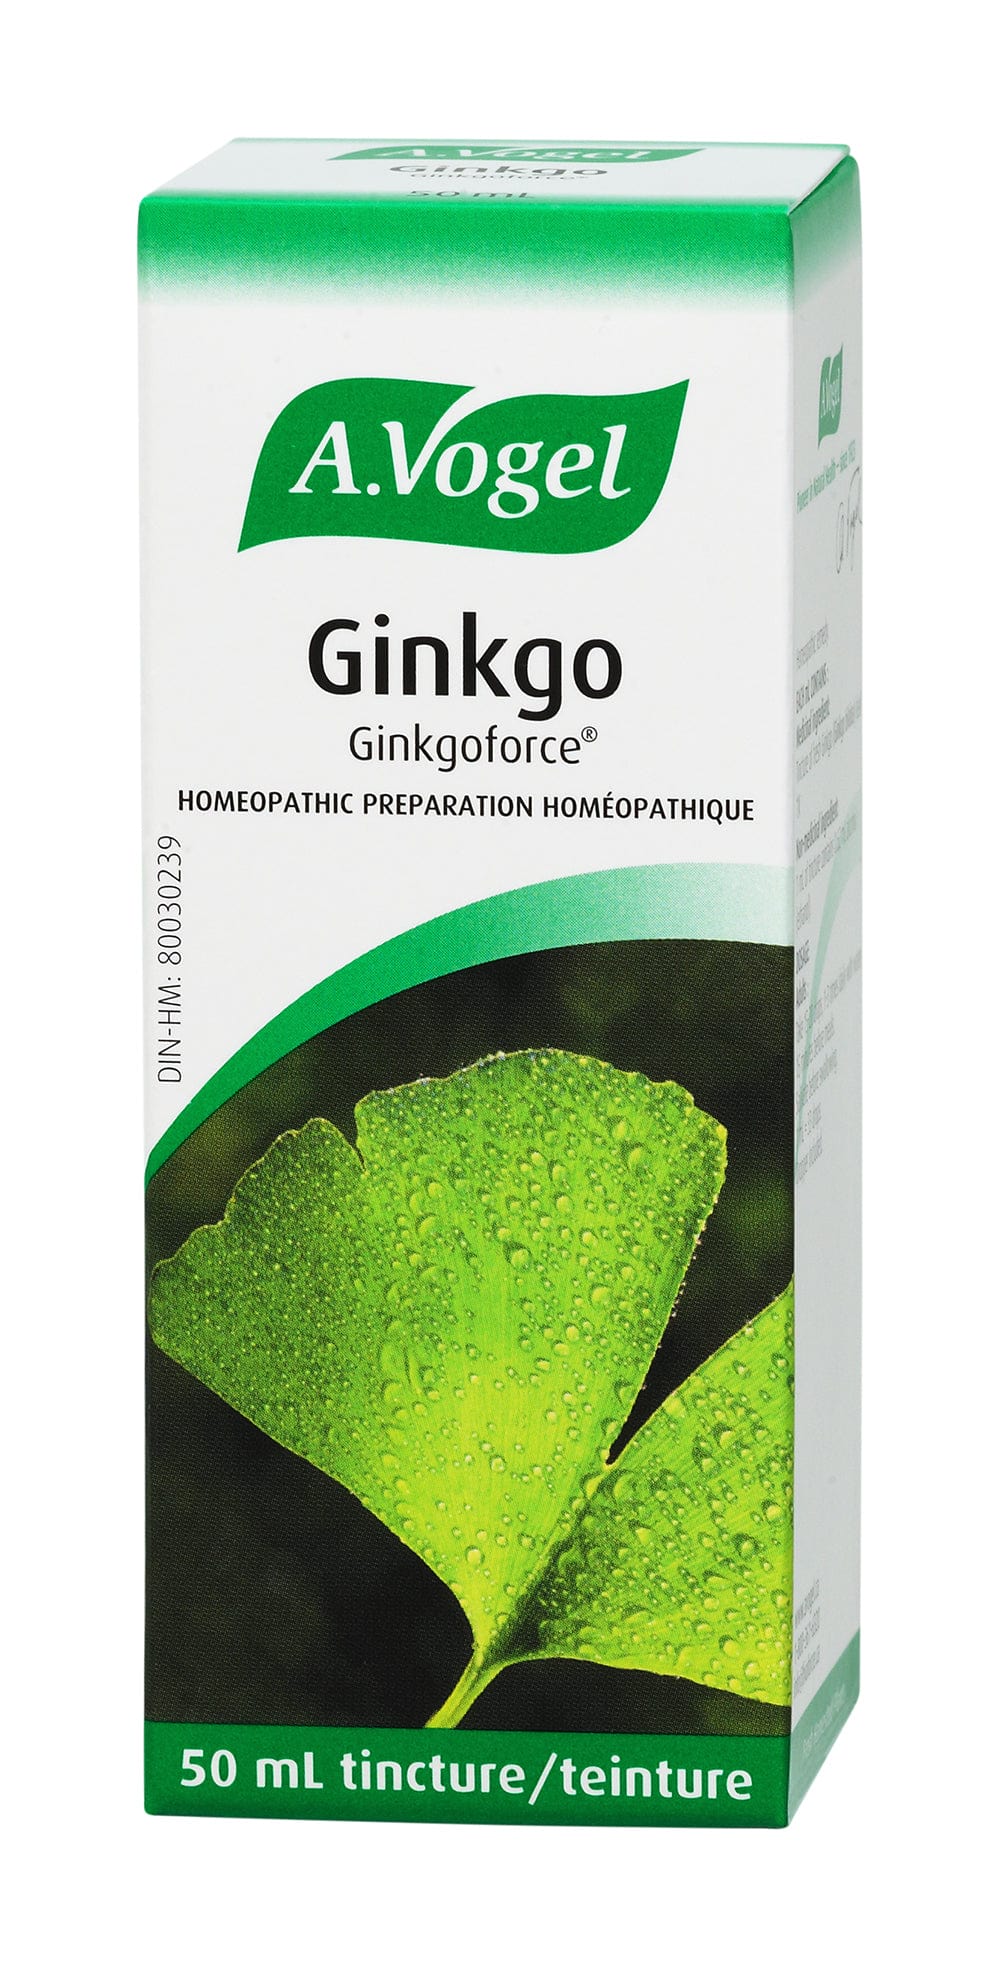 BIOFORCE (A. VOGEL) Suppléments Ginkgoforce (concentration) 50ml